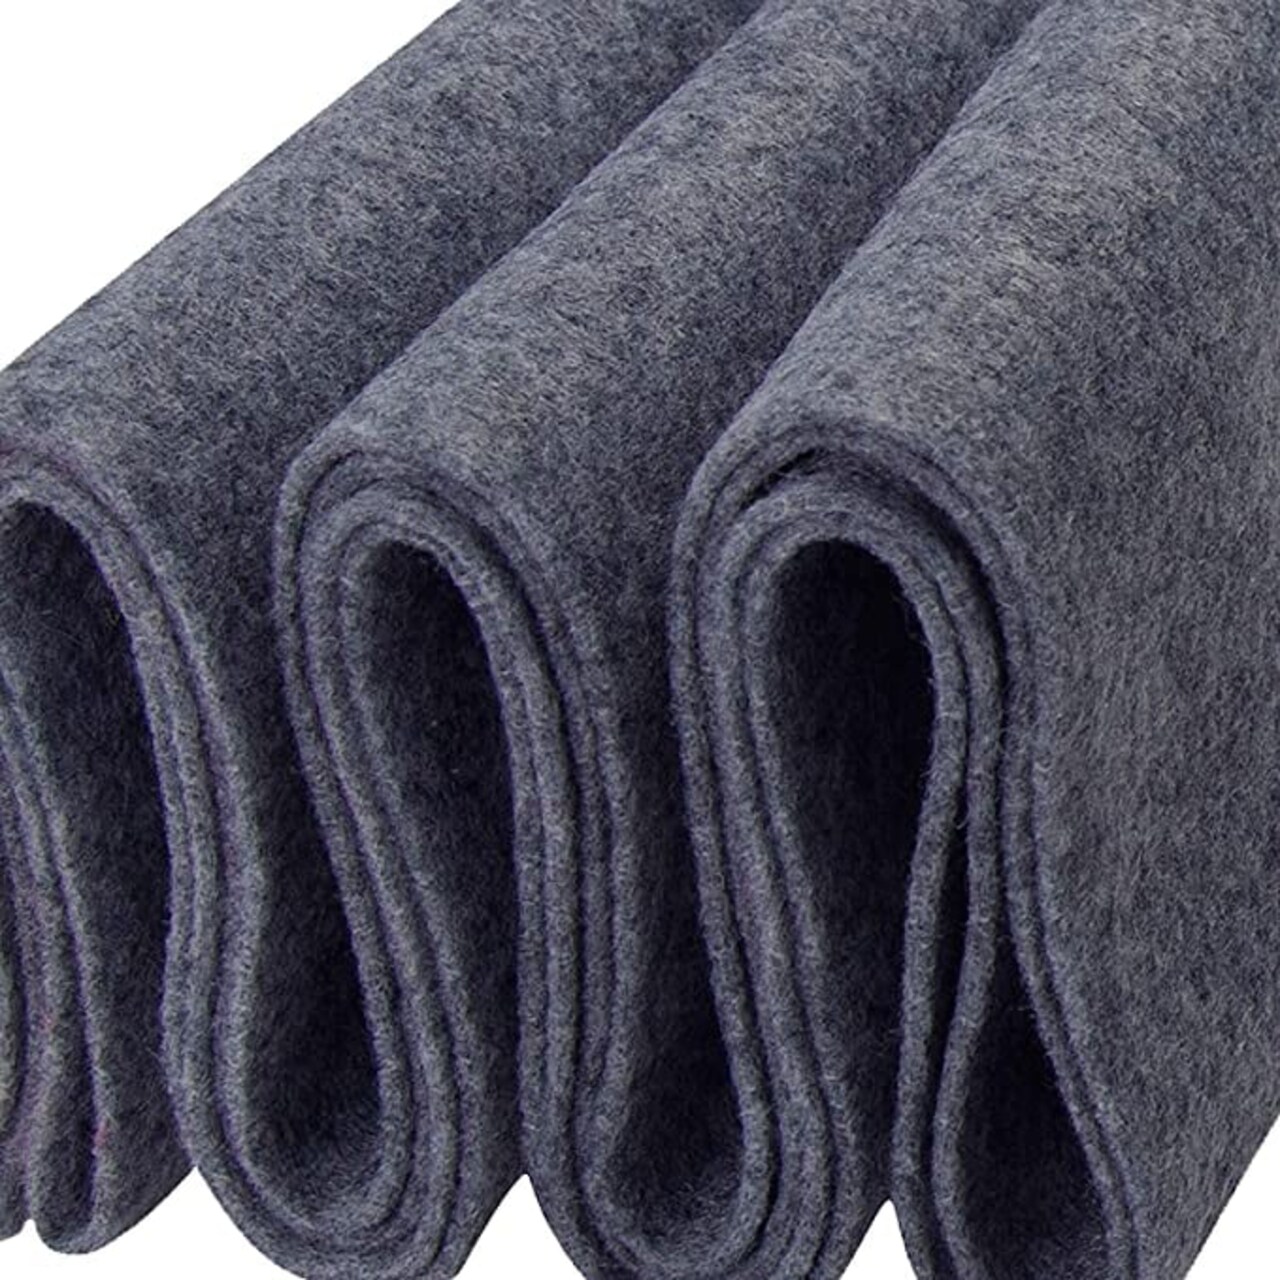 FabricLA Craft Felt Fabric - 36 X 36 Inch Wide & 1.6mm Thick Felt Fabric  - Use This Soft Felt for Crafts - Felt Material Pack - Heather Grey 455